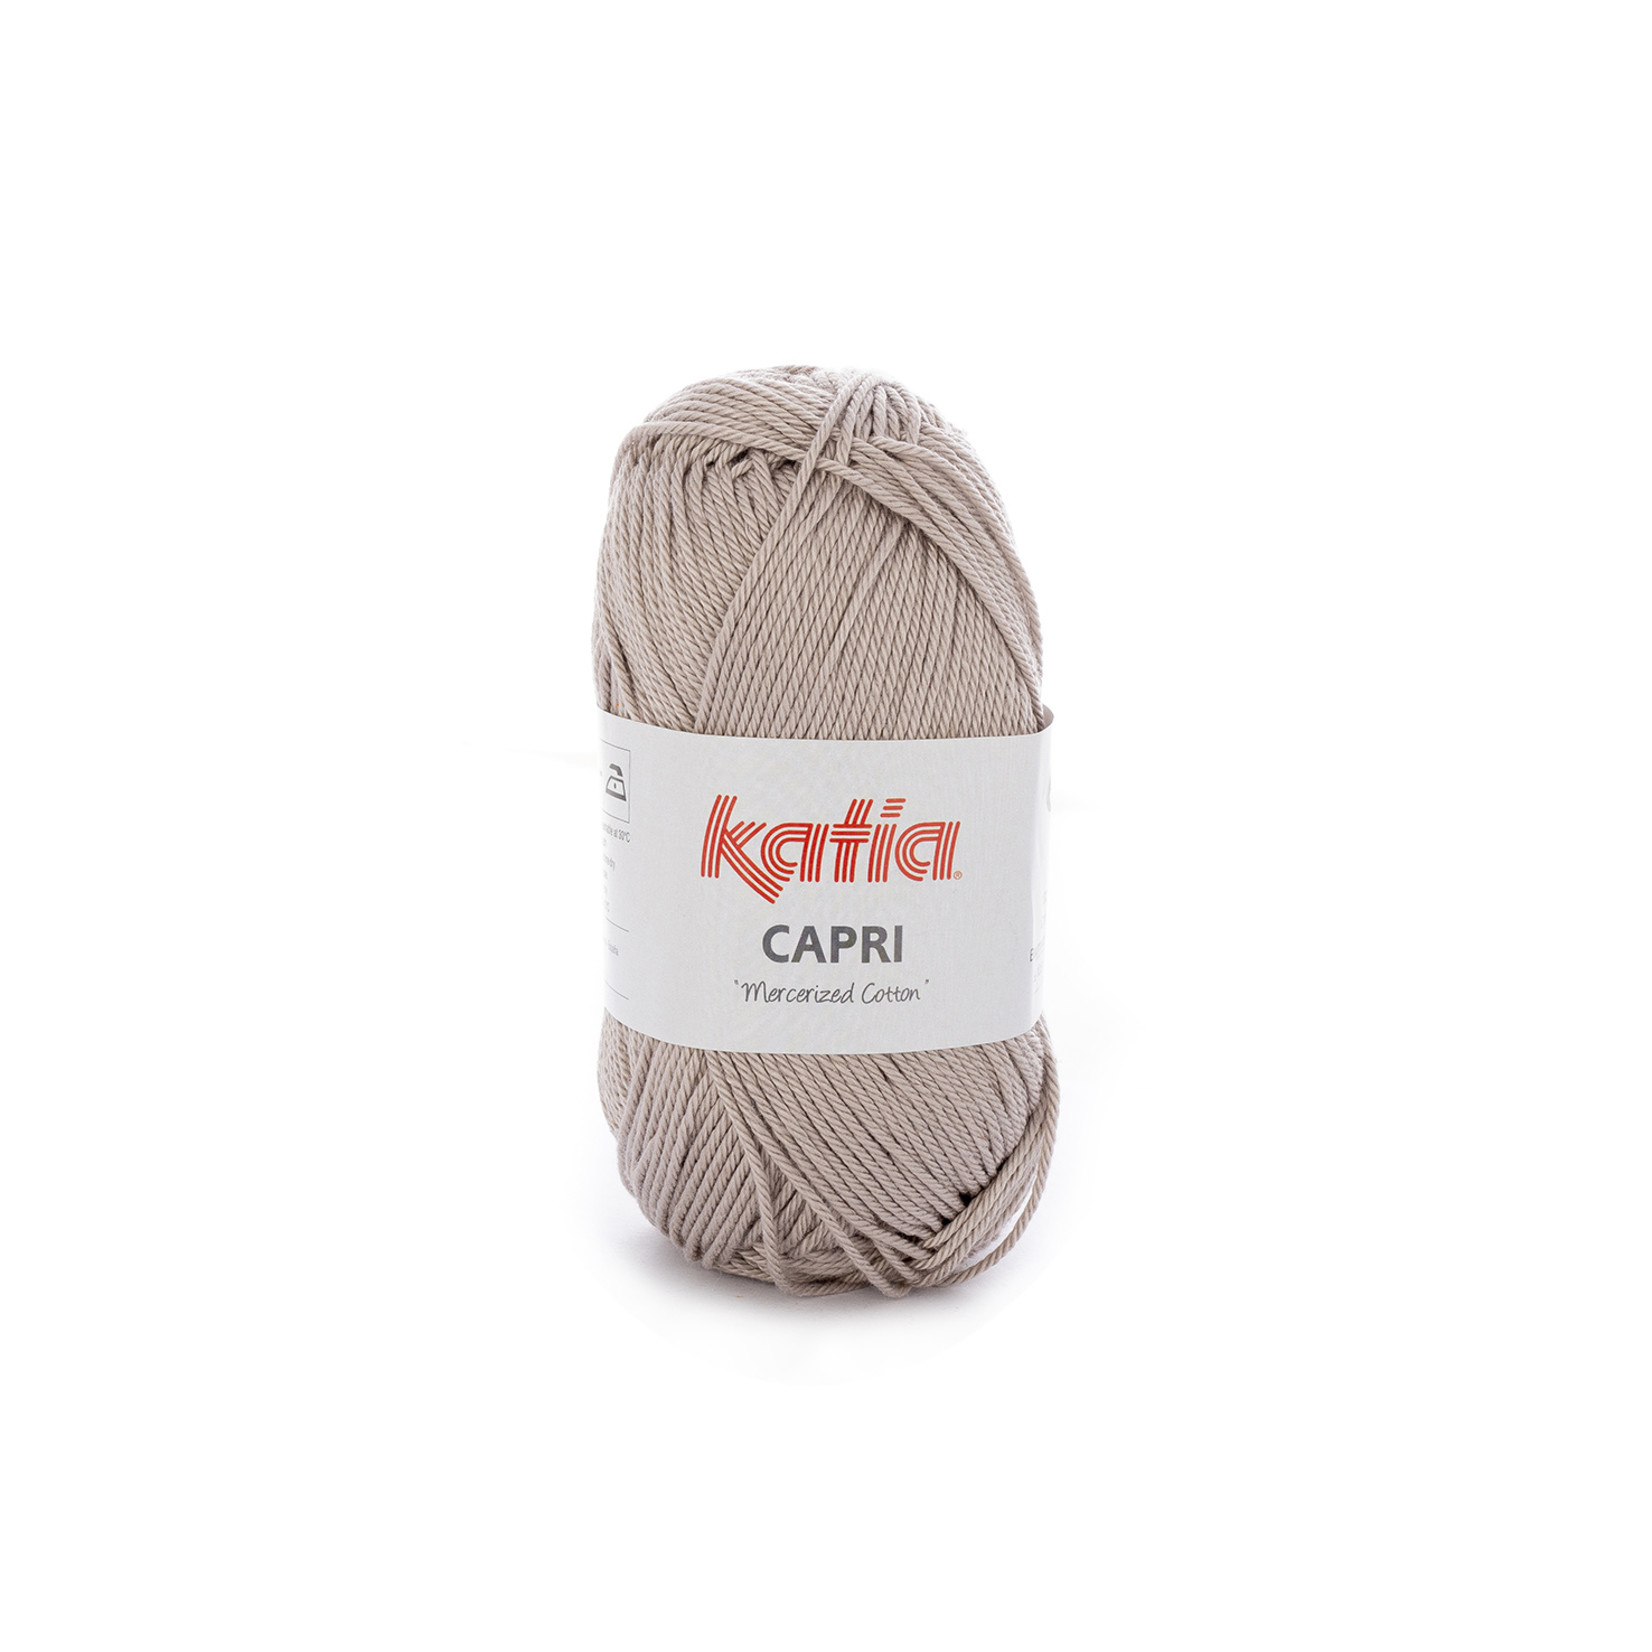 Katia Katia Capri - kleur 53 Steengrijs - 50 gr. = 125 m. - 100% katoen